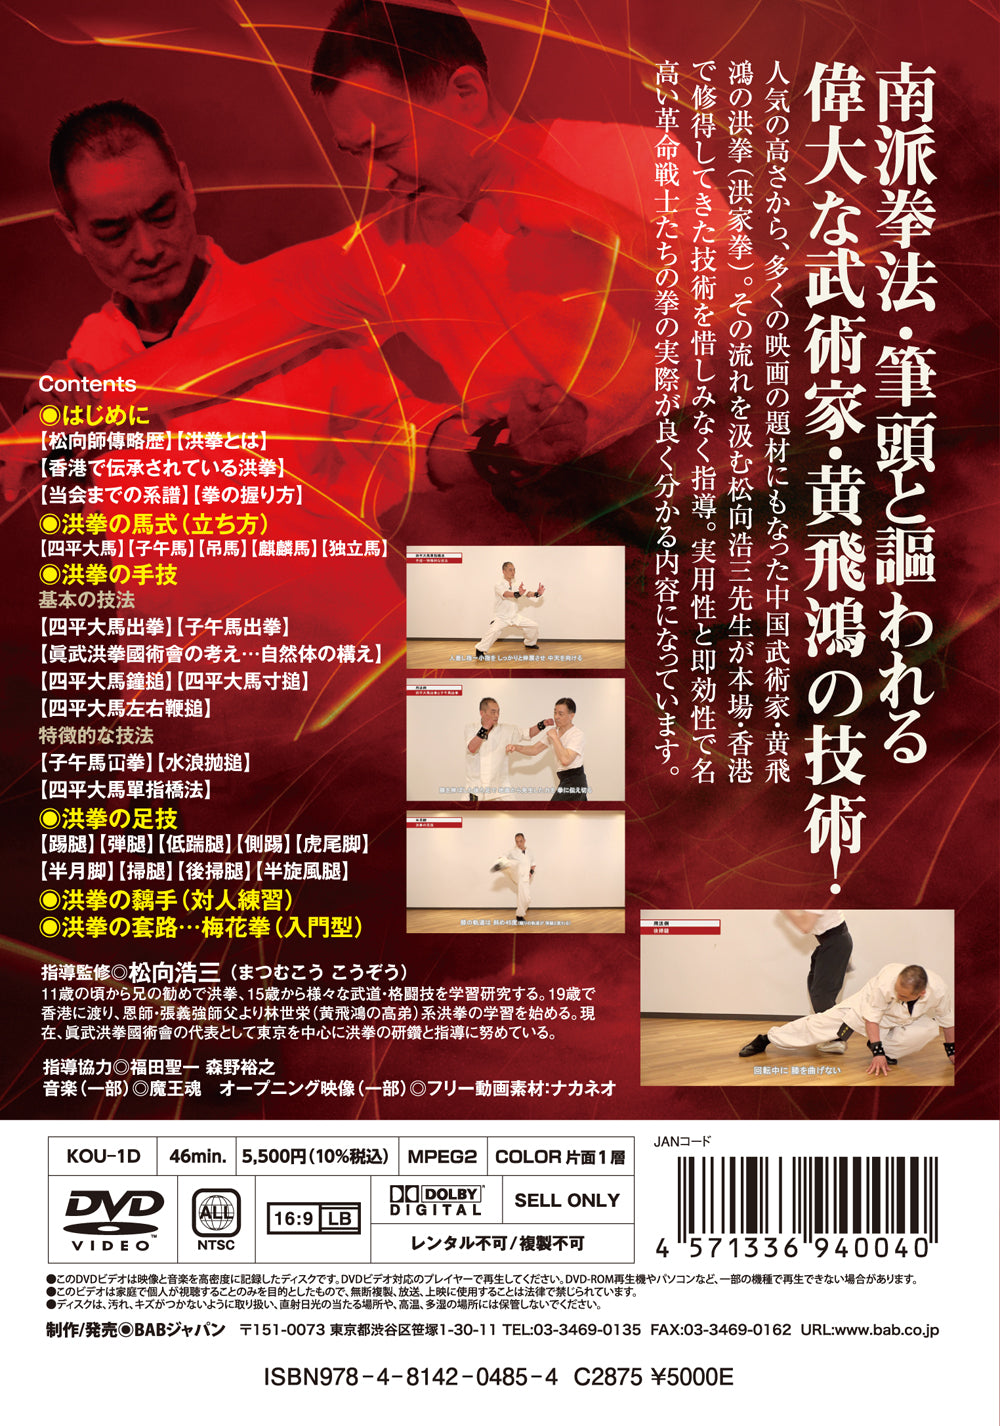 Cómo dominar el DVD Hung Kuen Kung Fu de Kozo Matsumuko